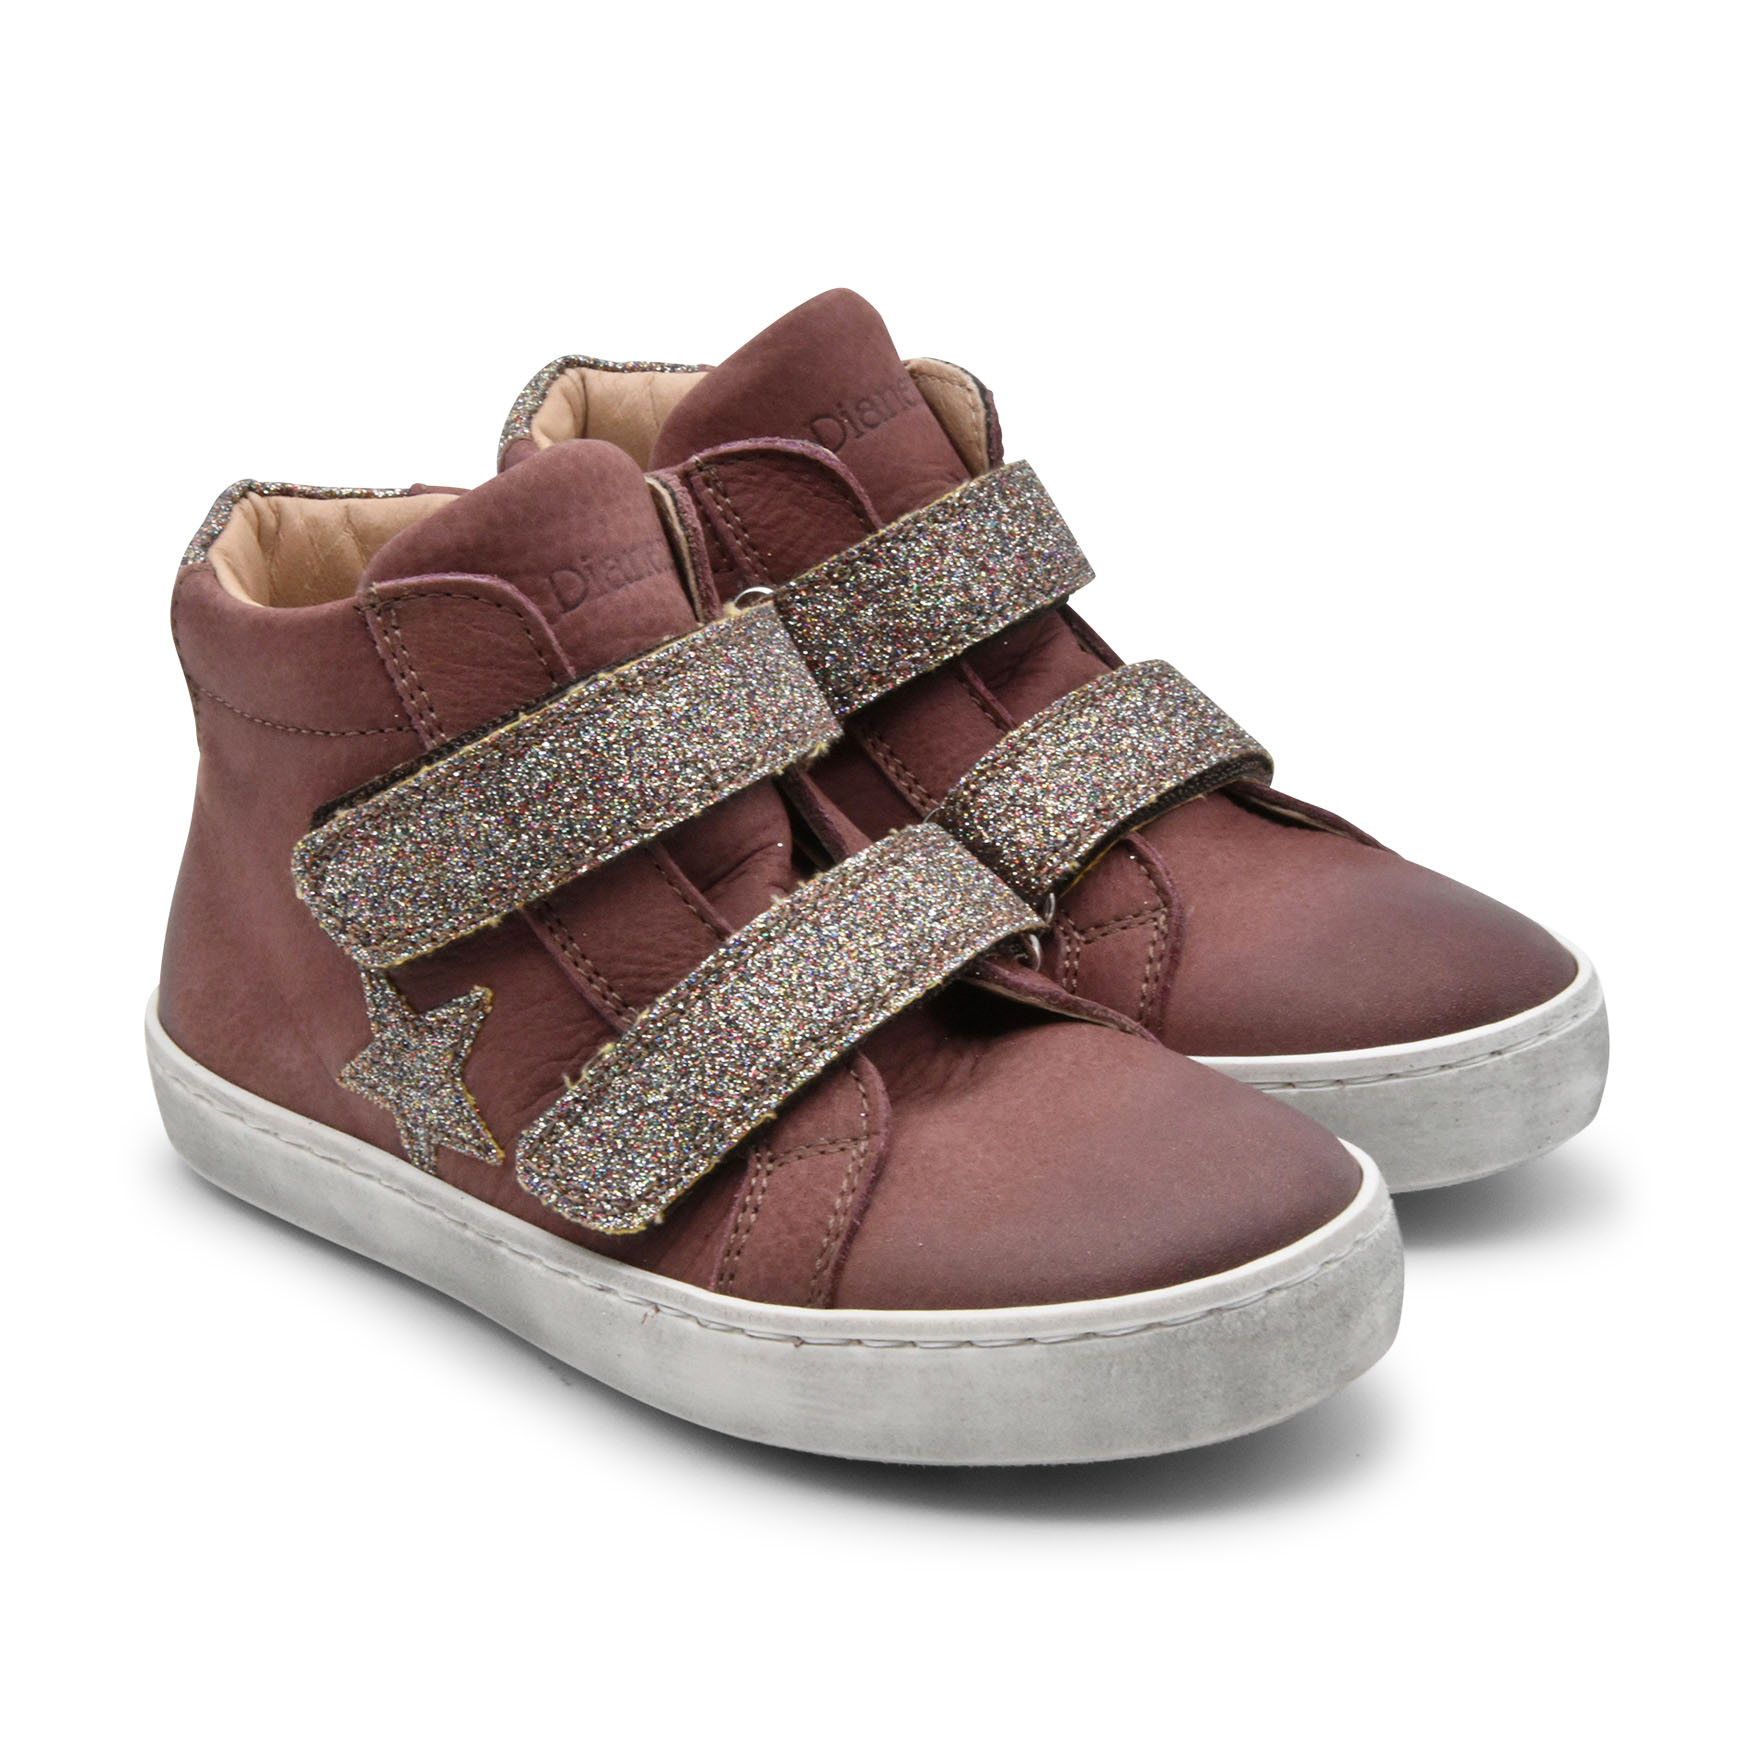 Dianetti Casual, Galatea, sneakers, made in italy, pelle nabuk, stella glitter, velcro, zip rosa oro, fronte